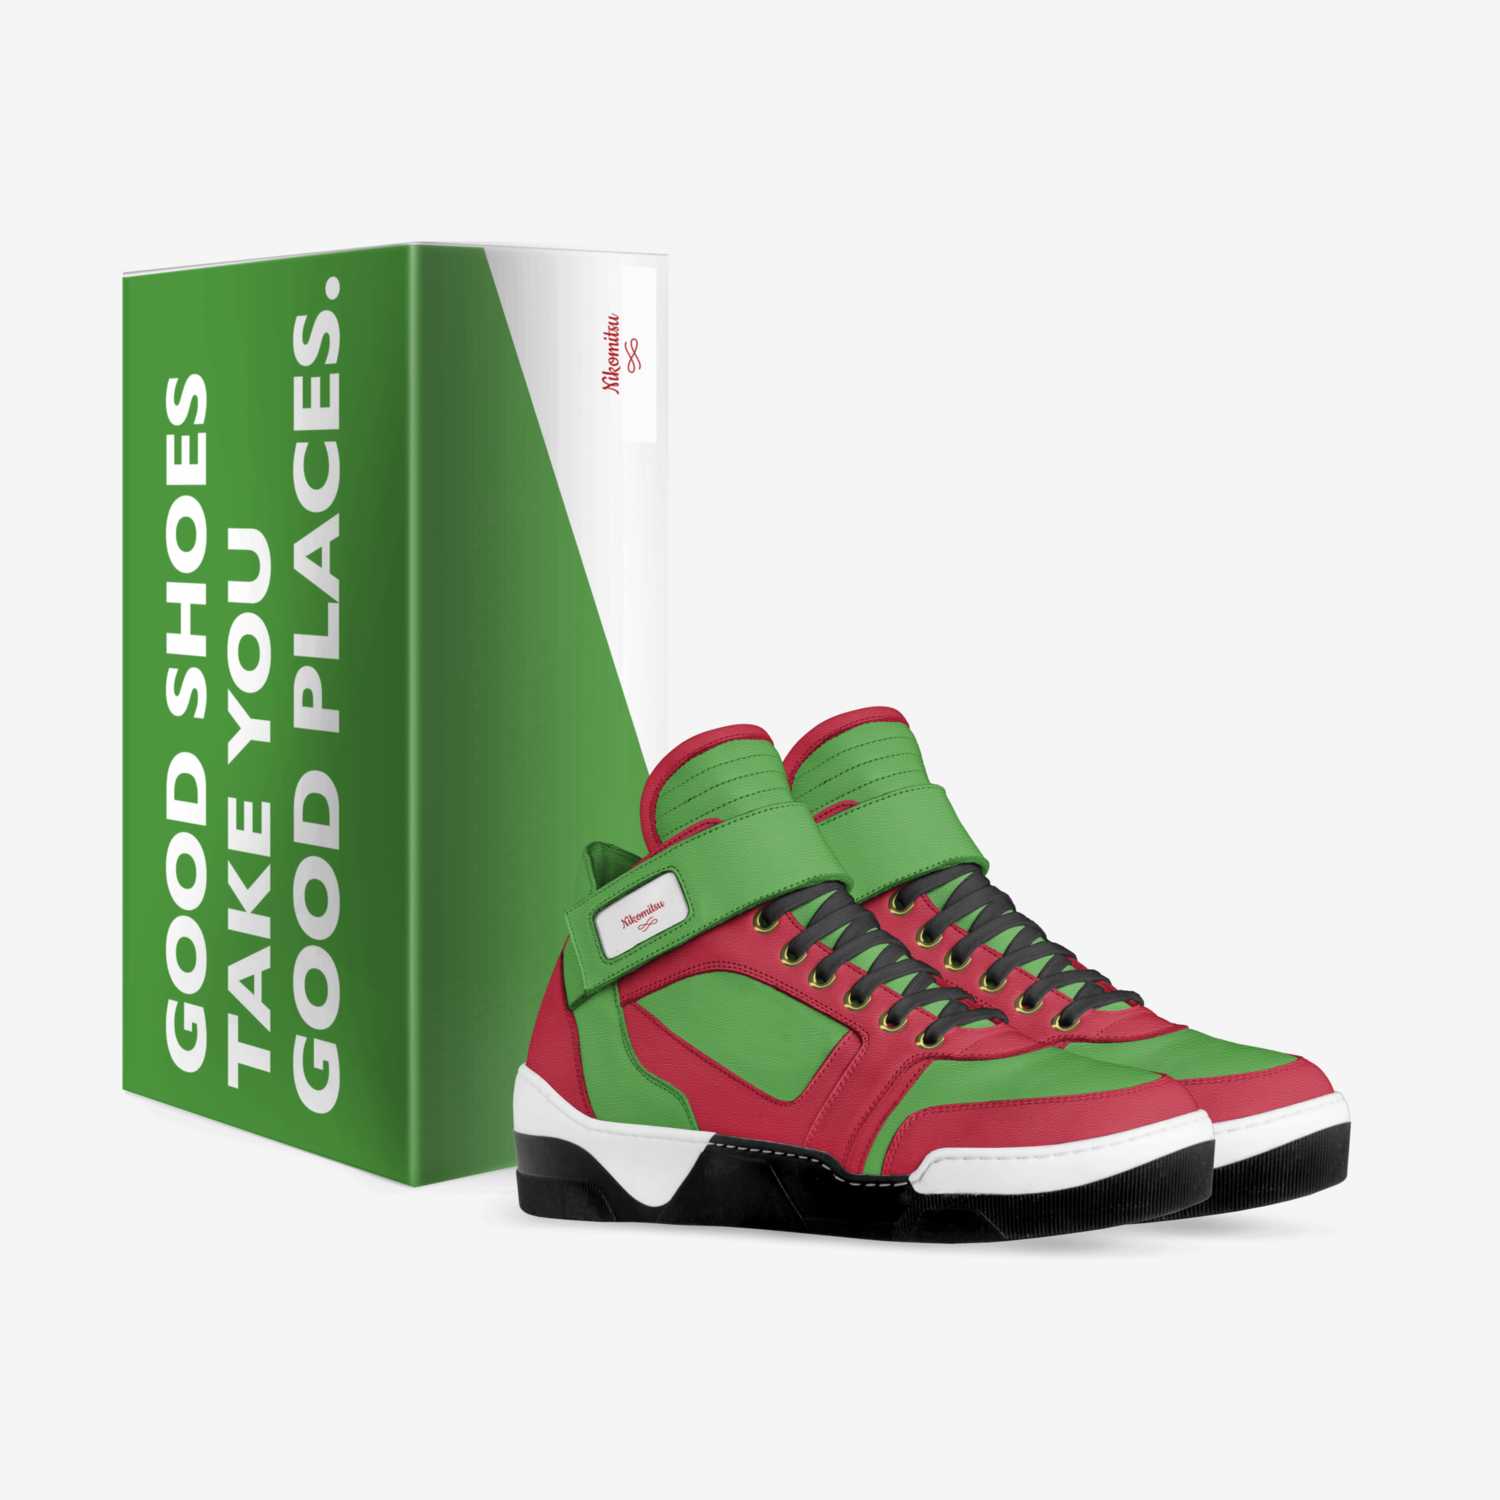 Nikomitsu custom made in Italy shoes by Nicholas Kremidas | Box view